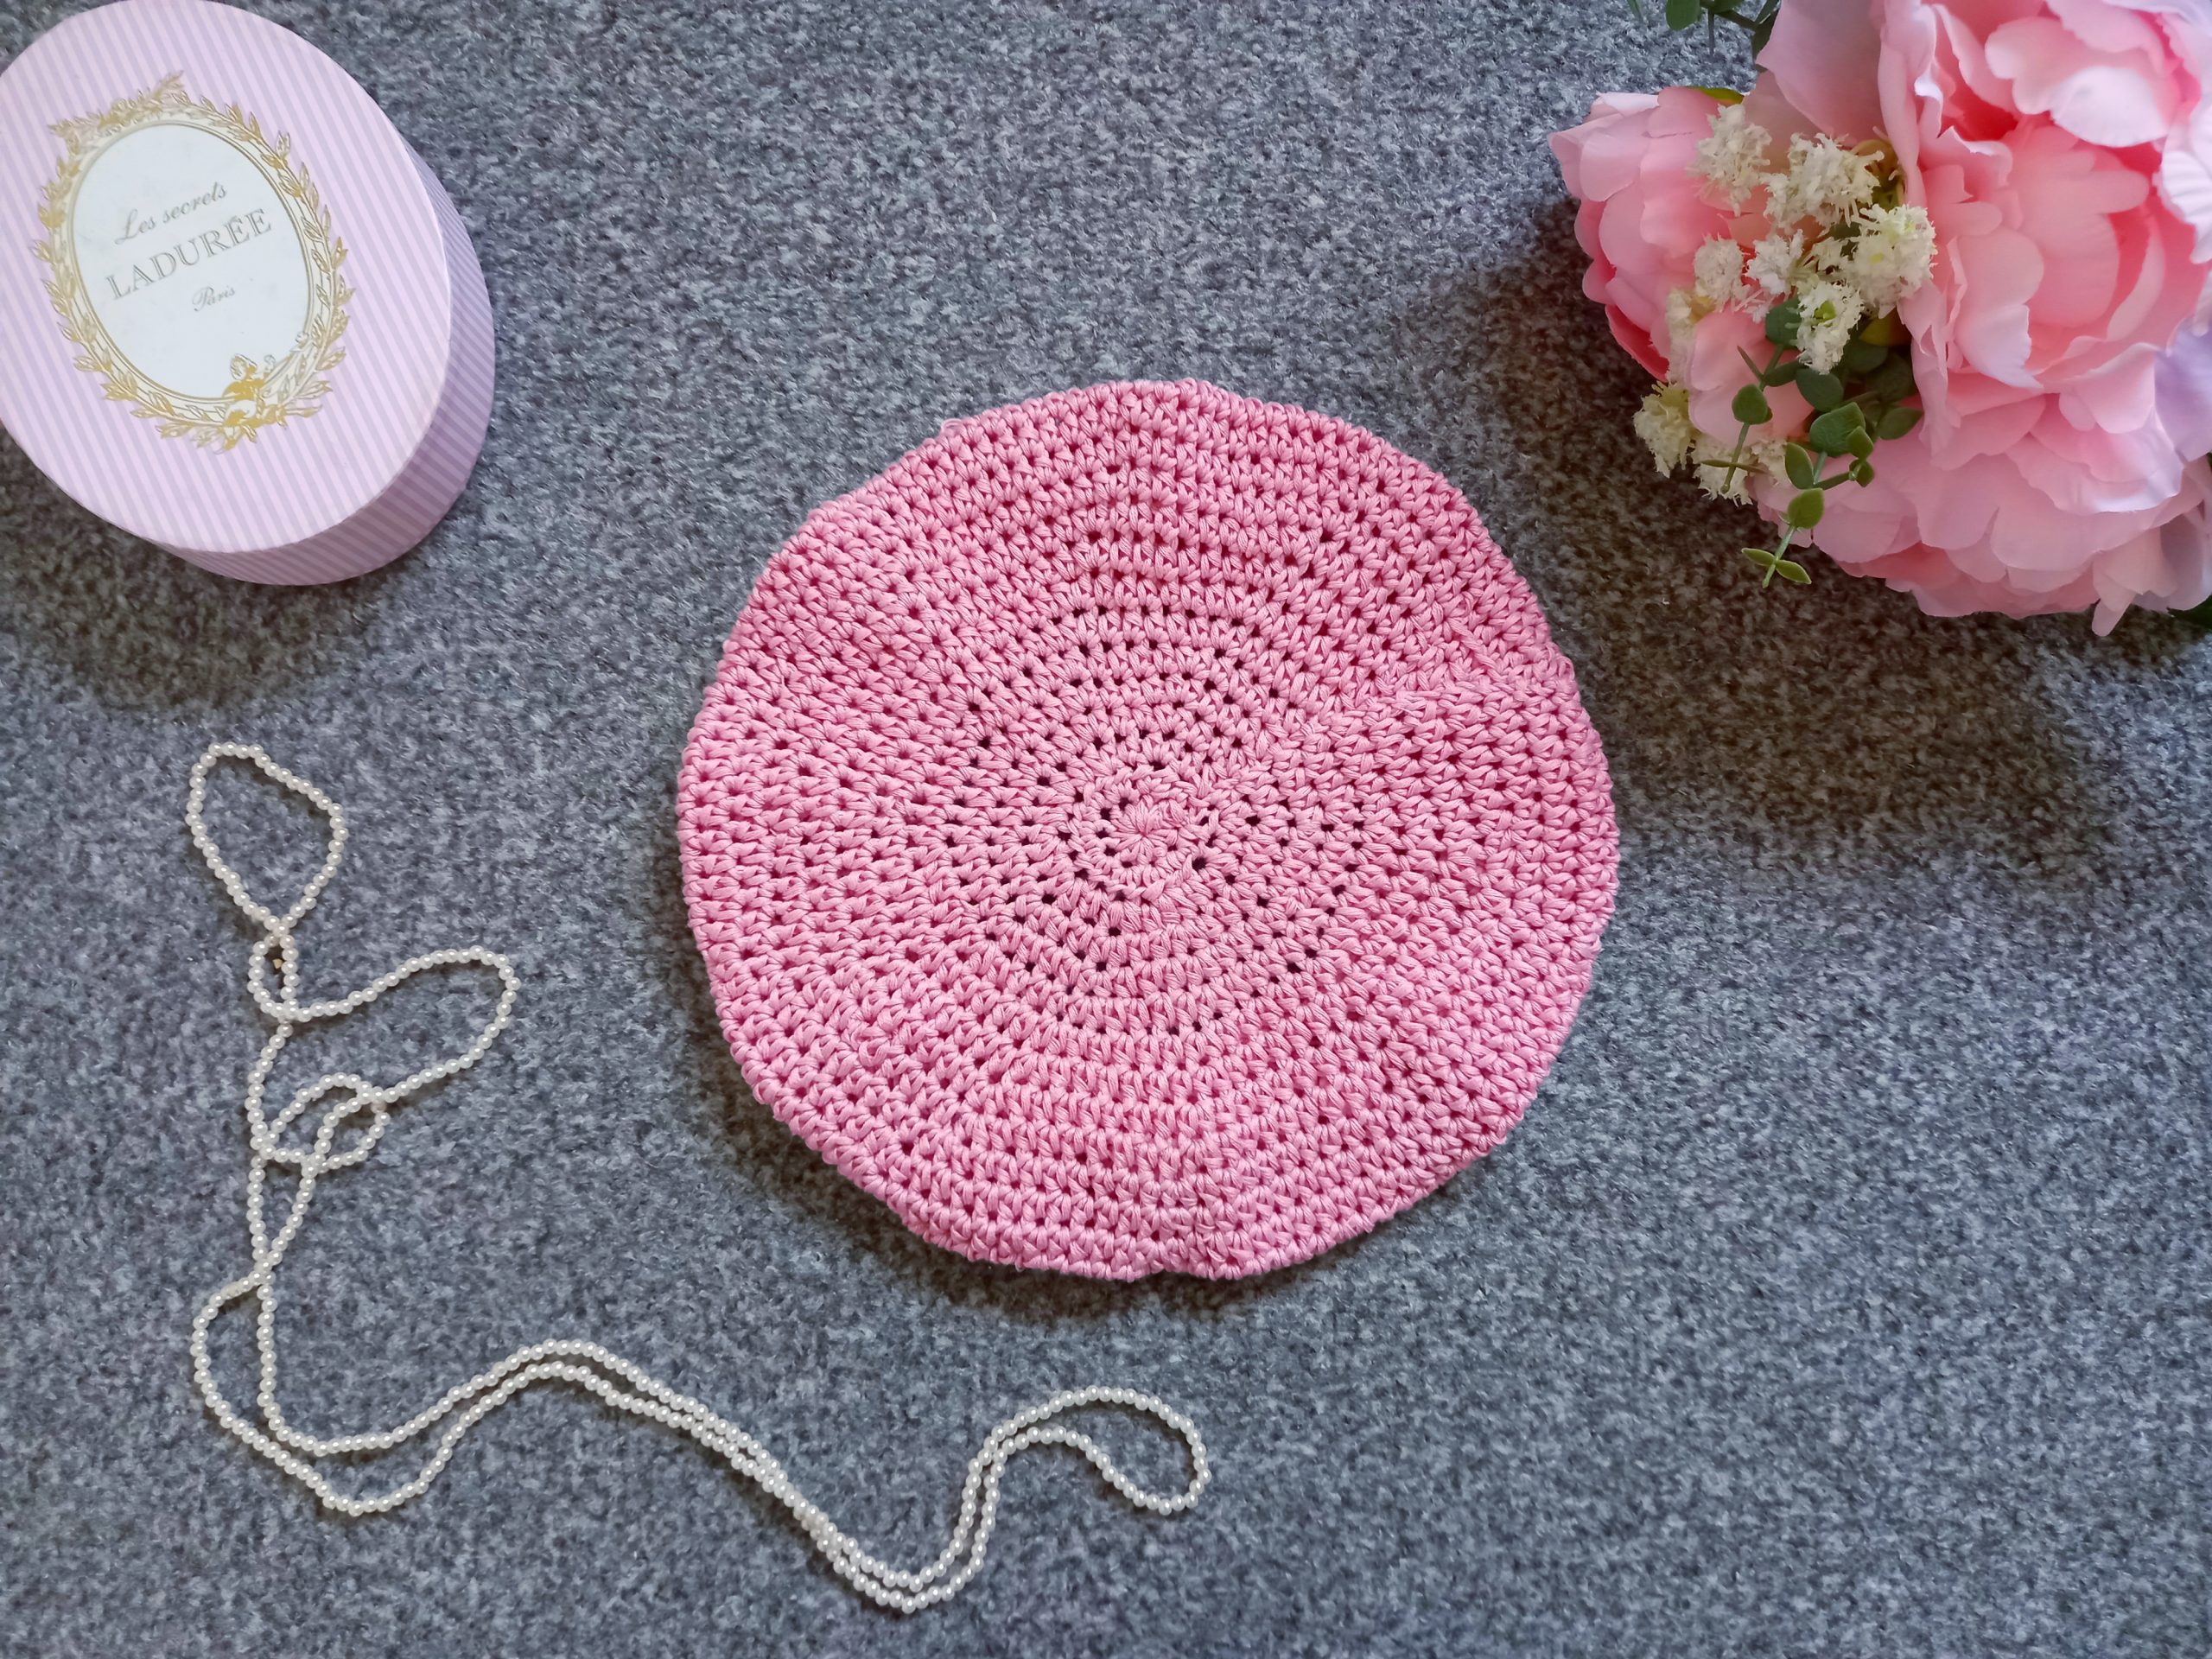 Crochet Lamp Shade Free Pattern Instructions